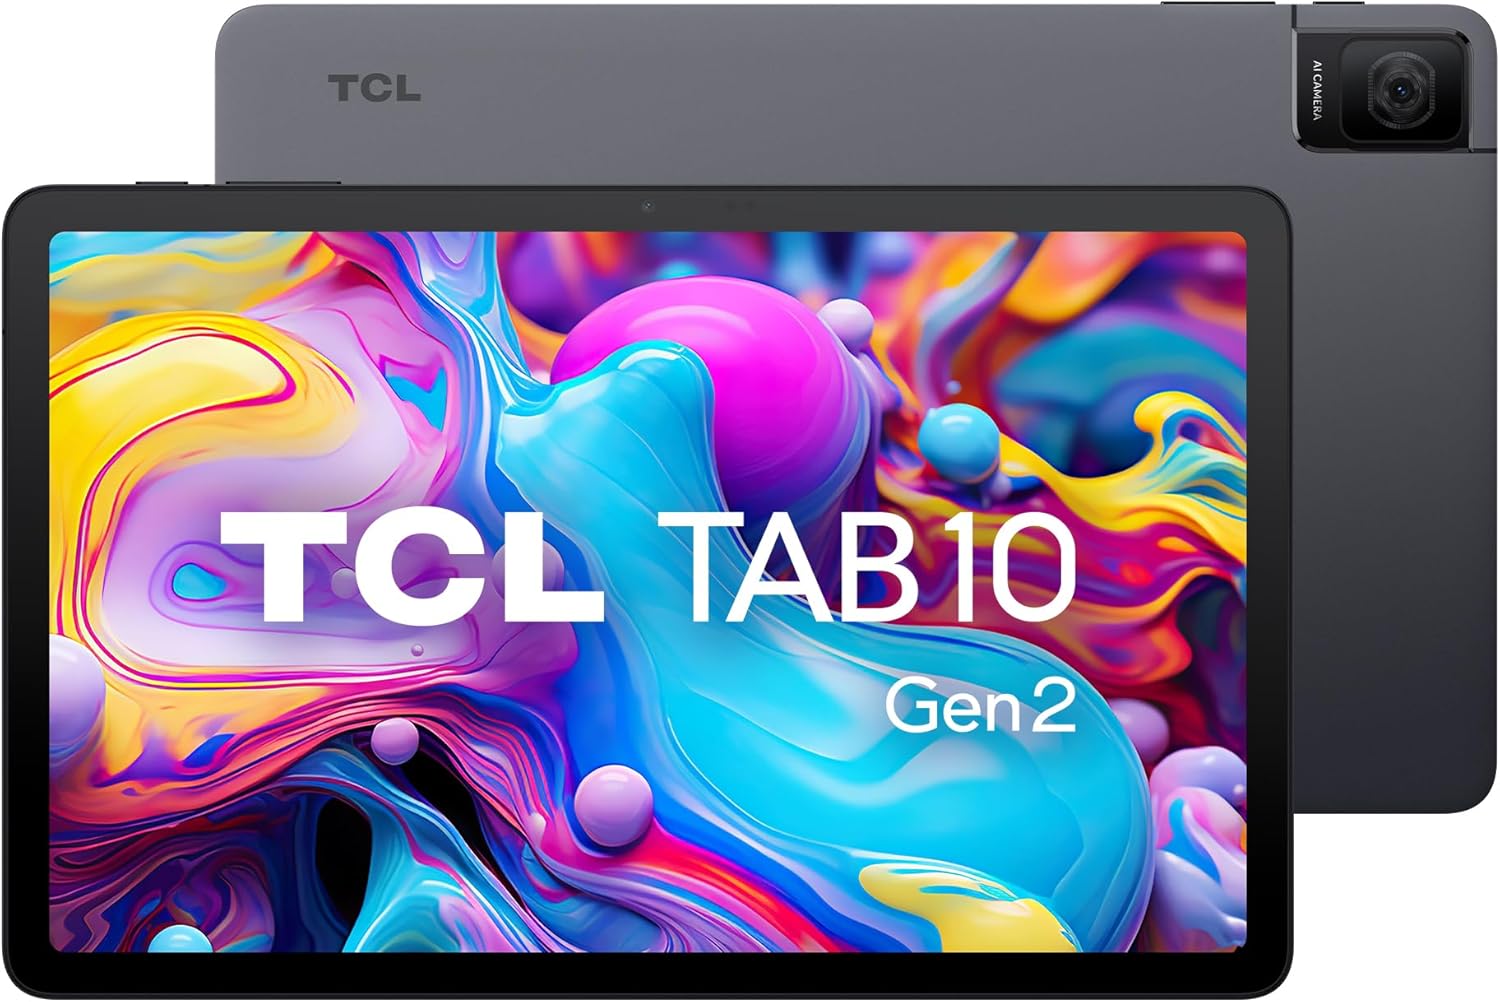 TCL Tab 10 Gen 2: Save $71!